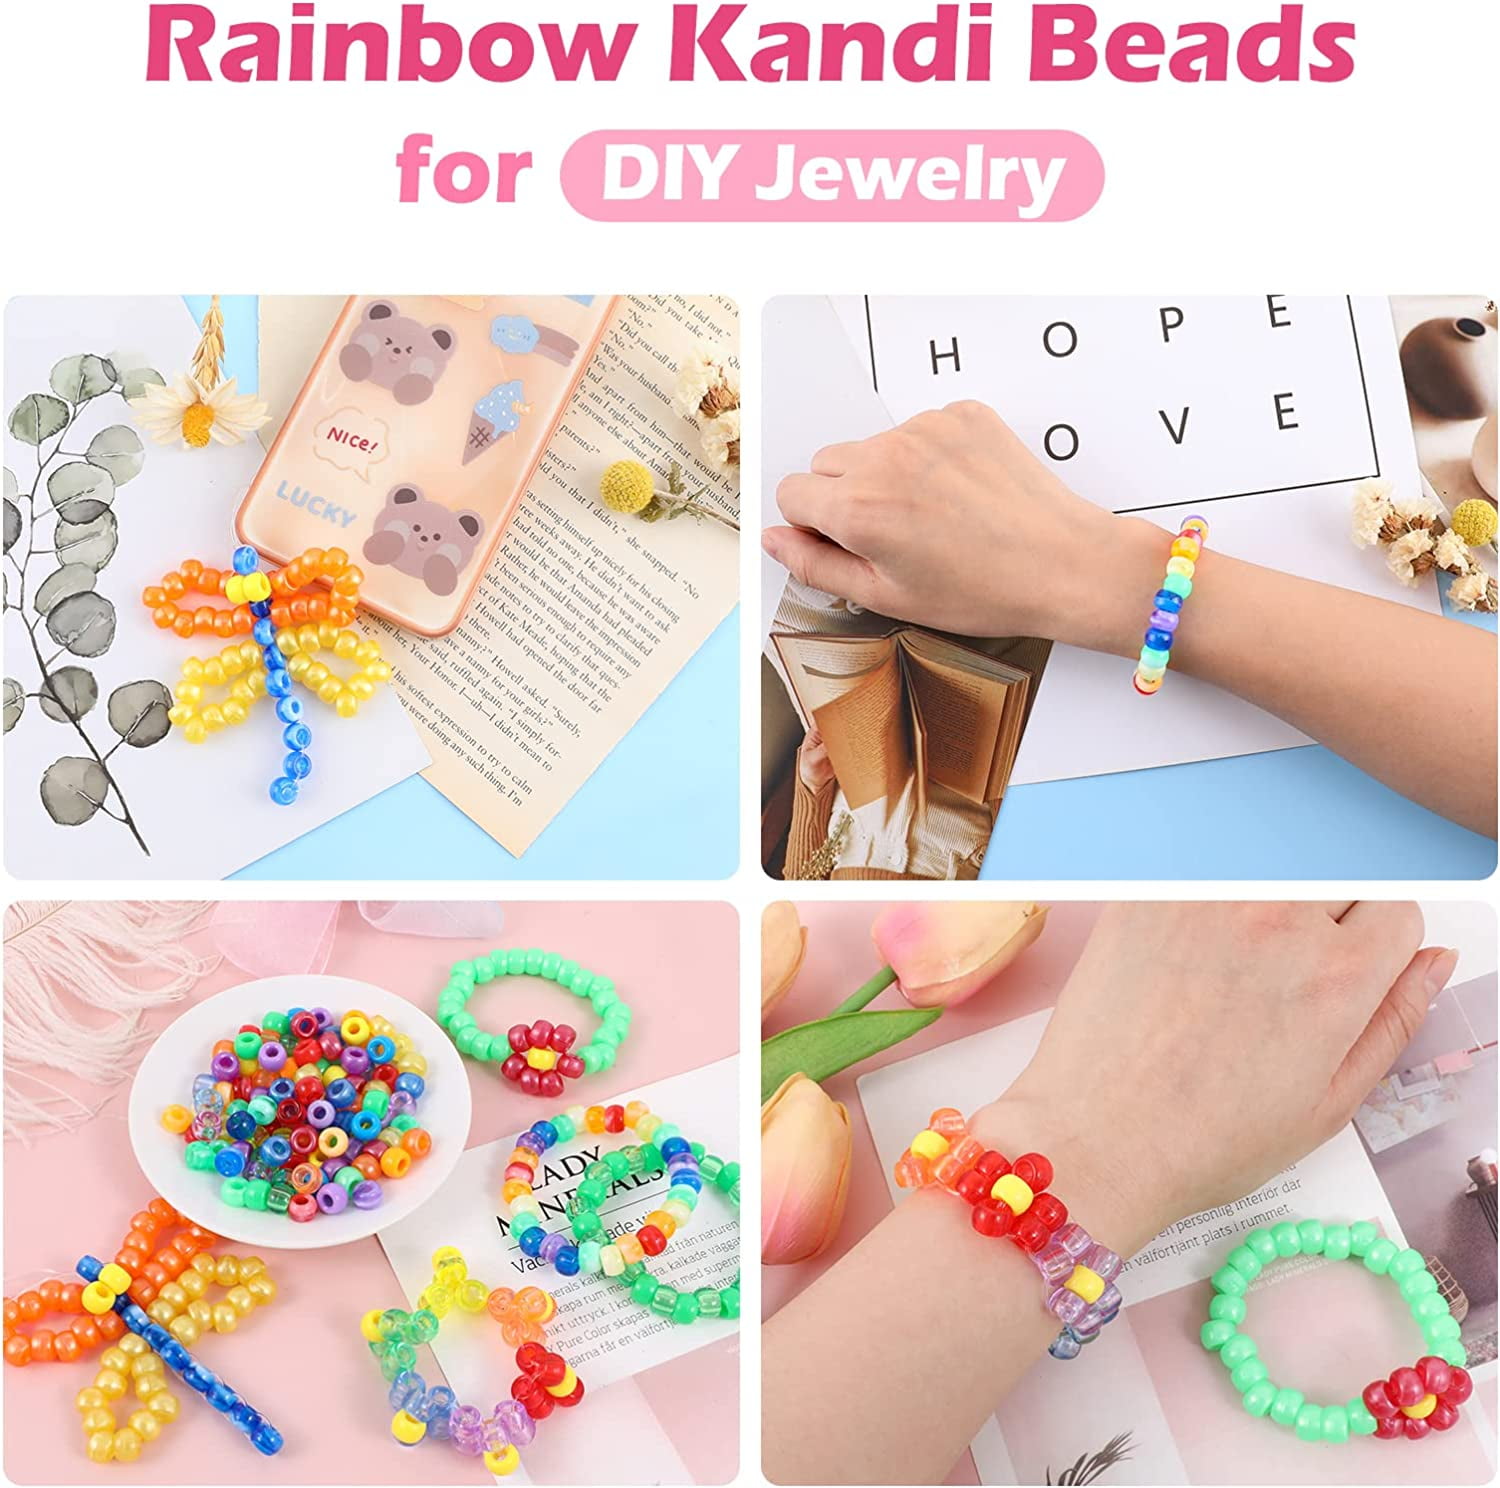 20 Random Rave Kandi Bracelets - EDM RAVE KANDI PLUR | eBay